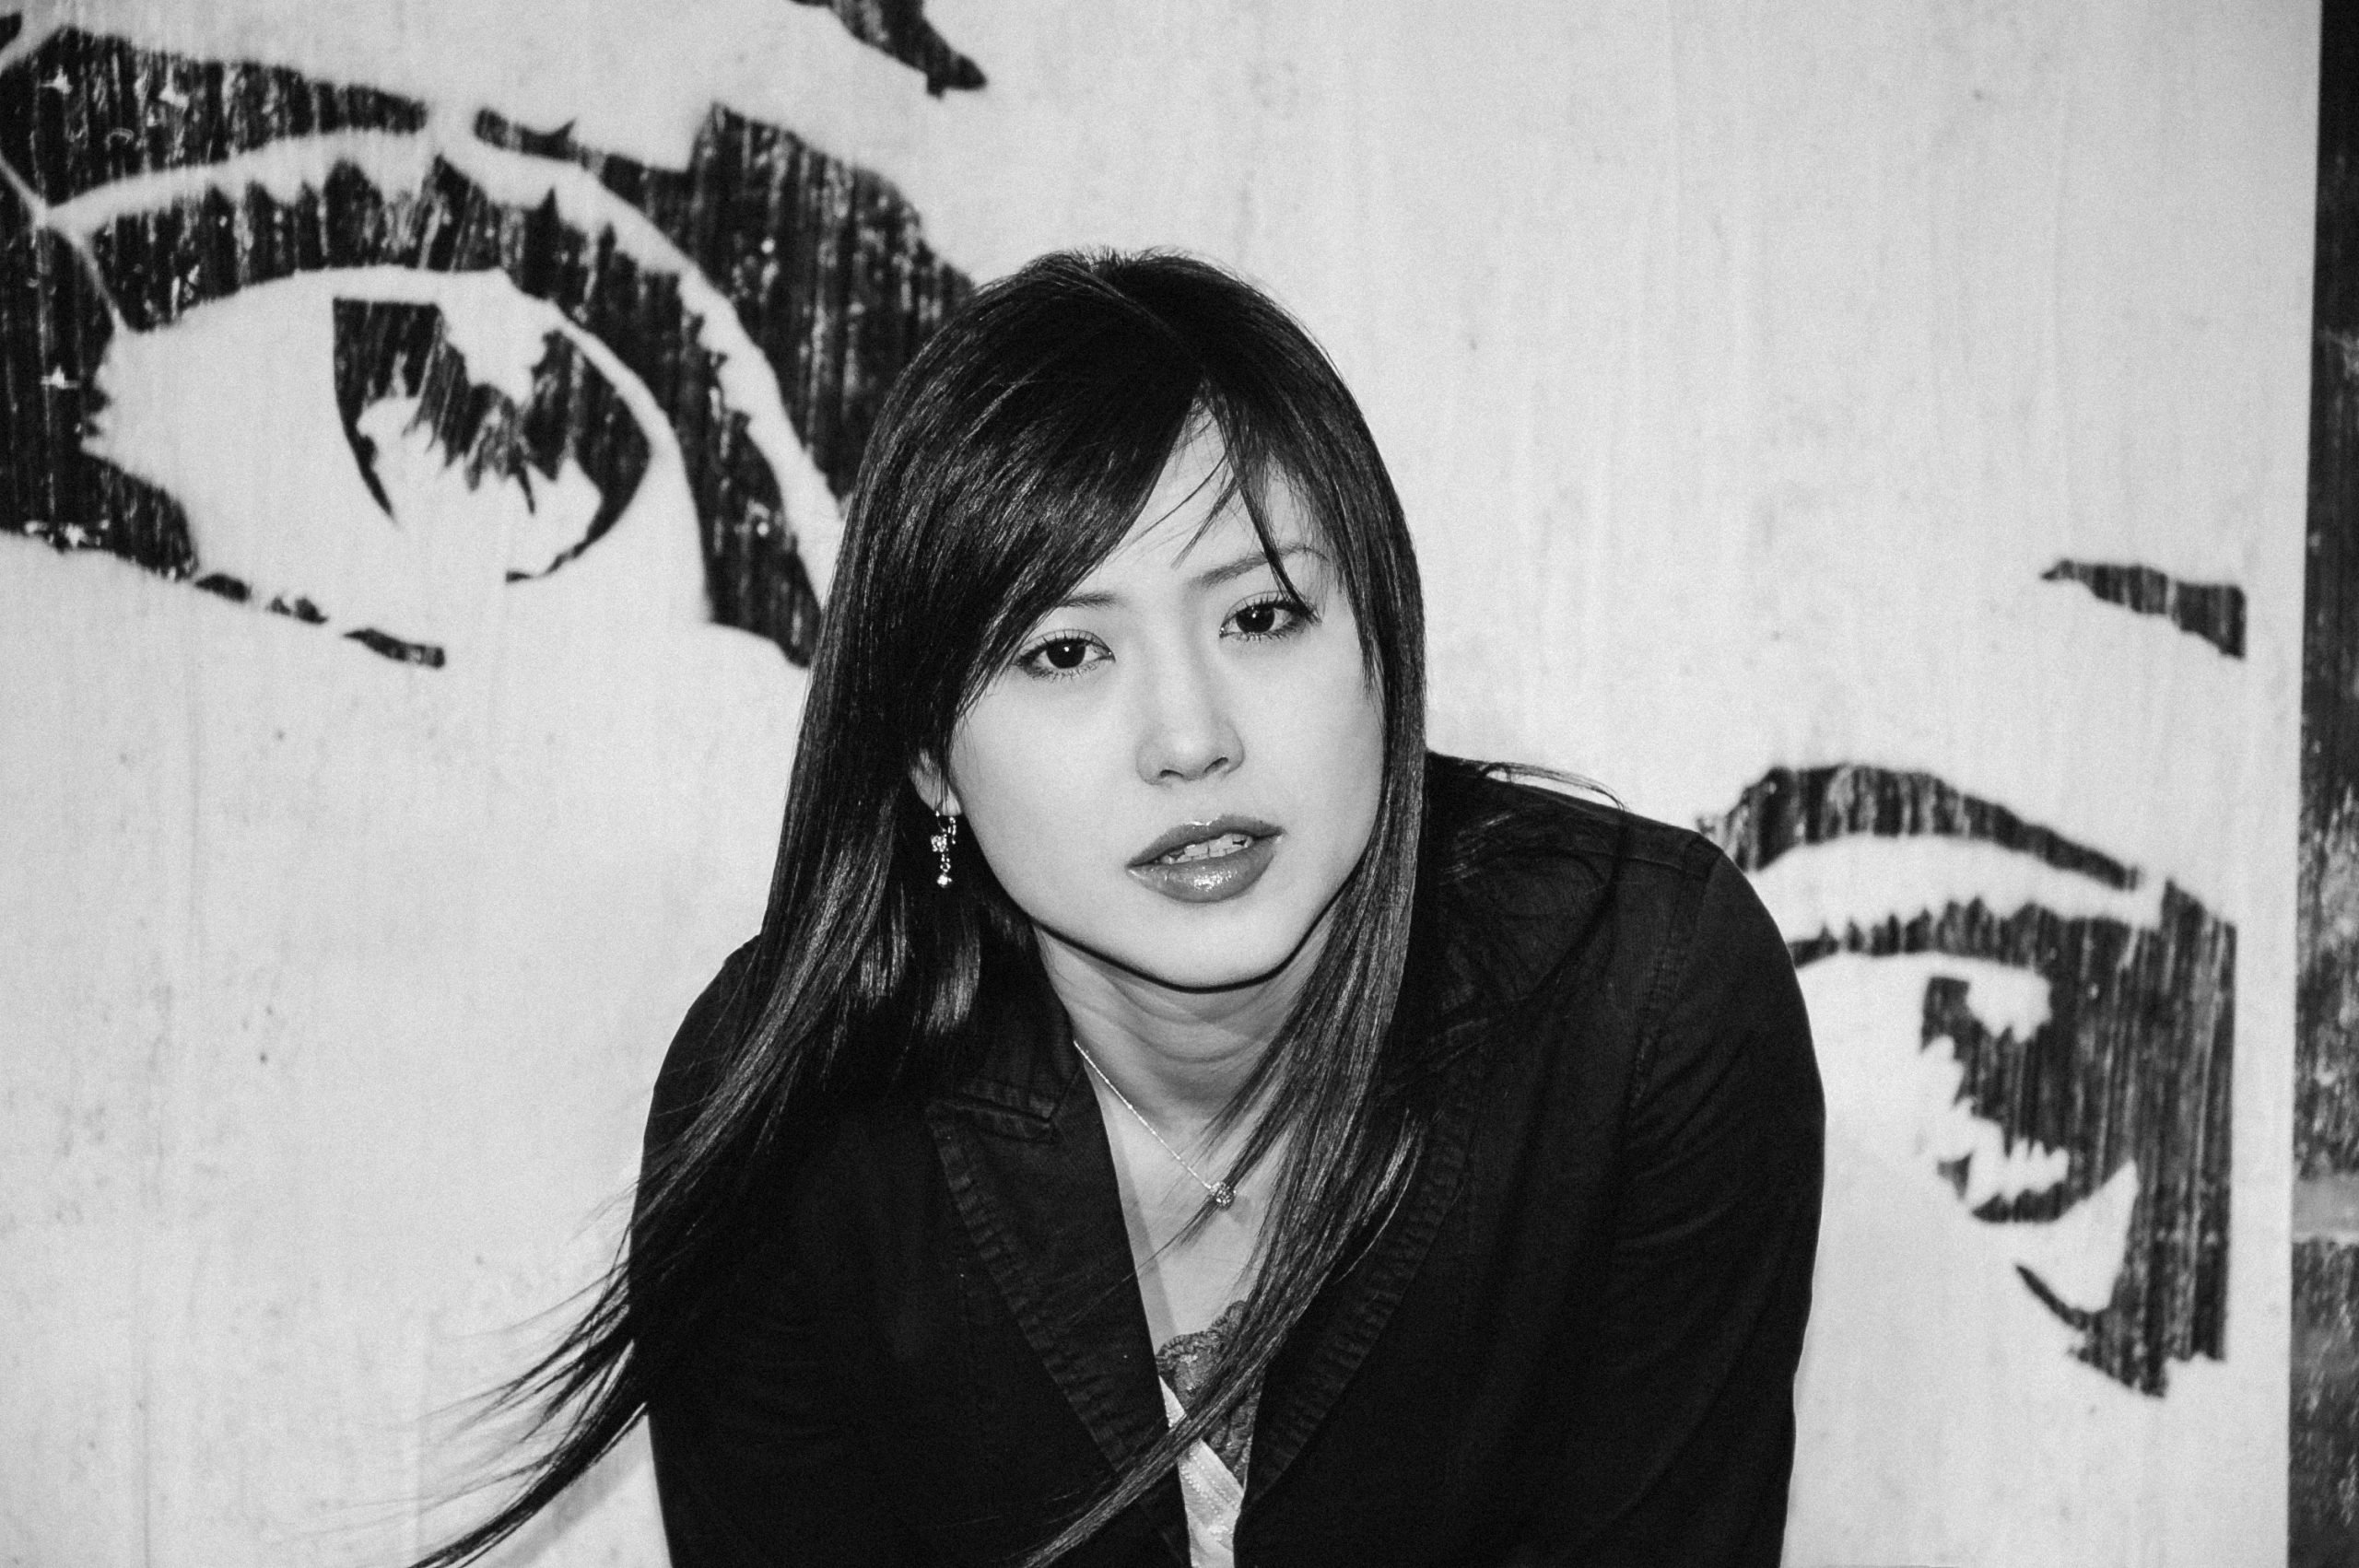 Photograph of Ayako Shiratori from Japan